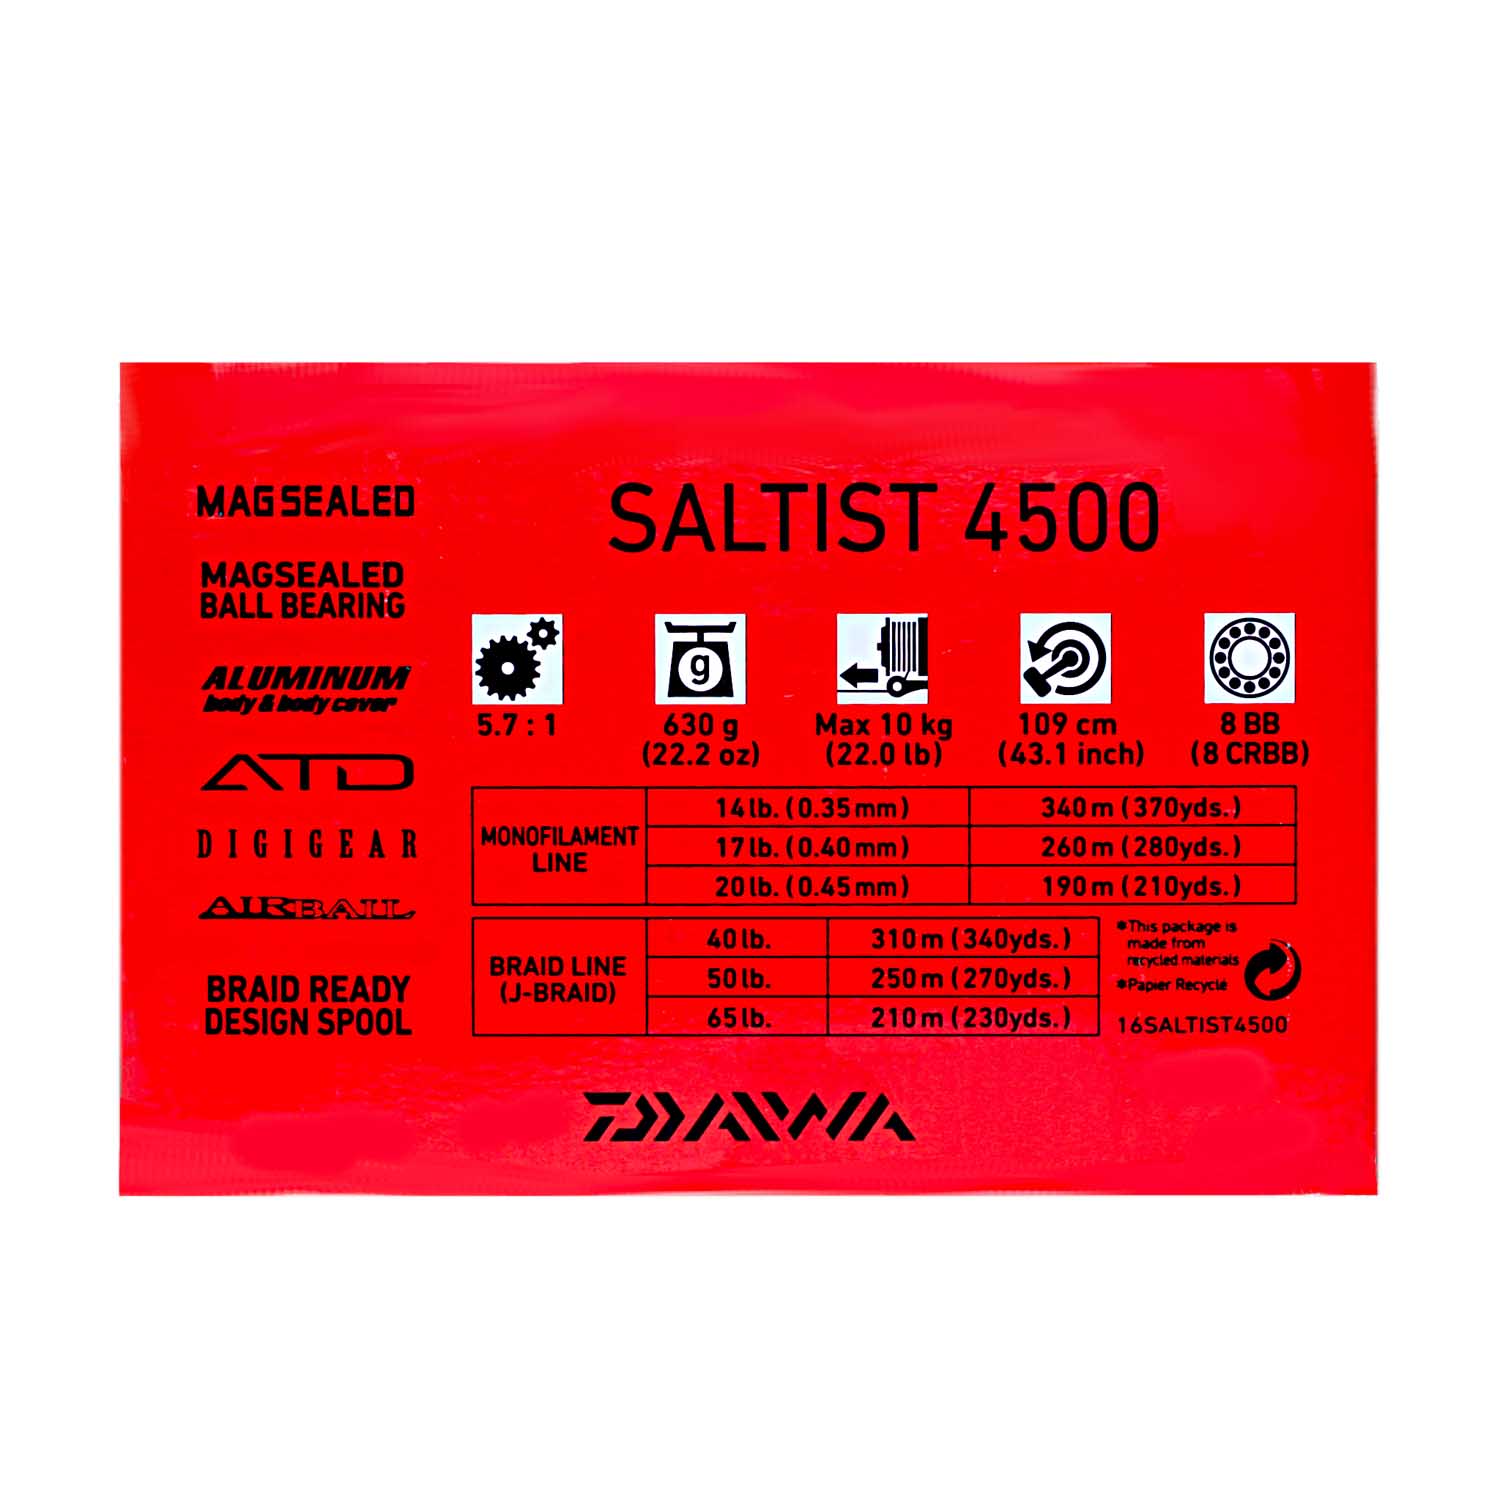 Daiwa Saltist 4500 Spinning Reel